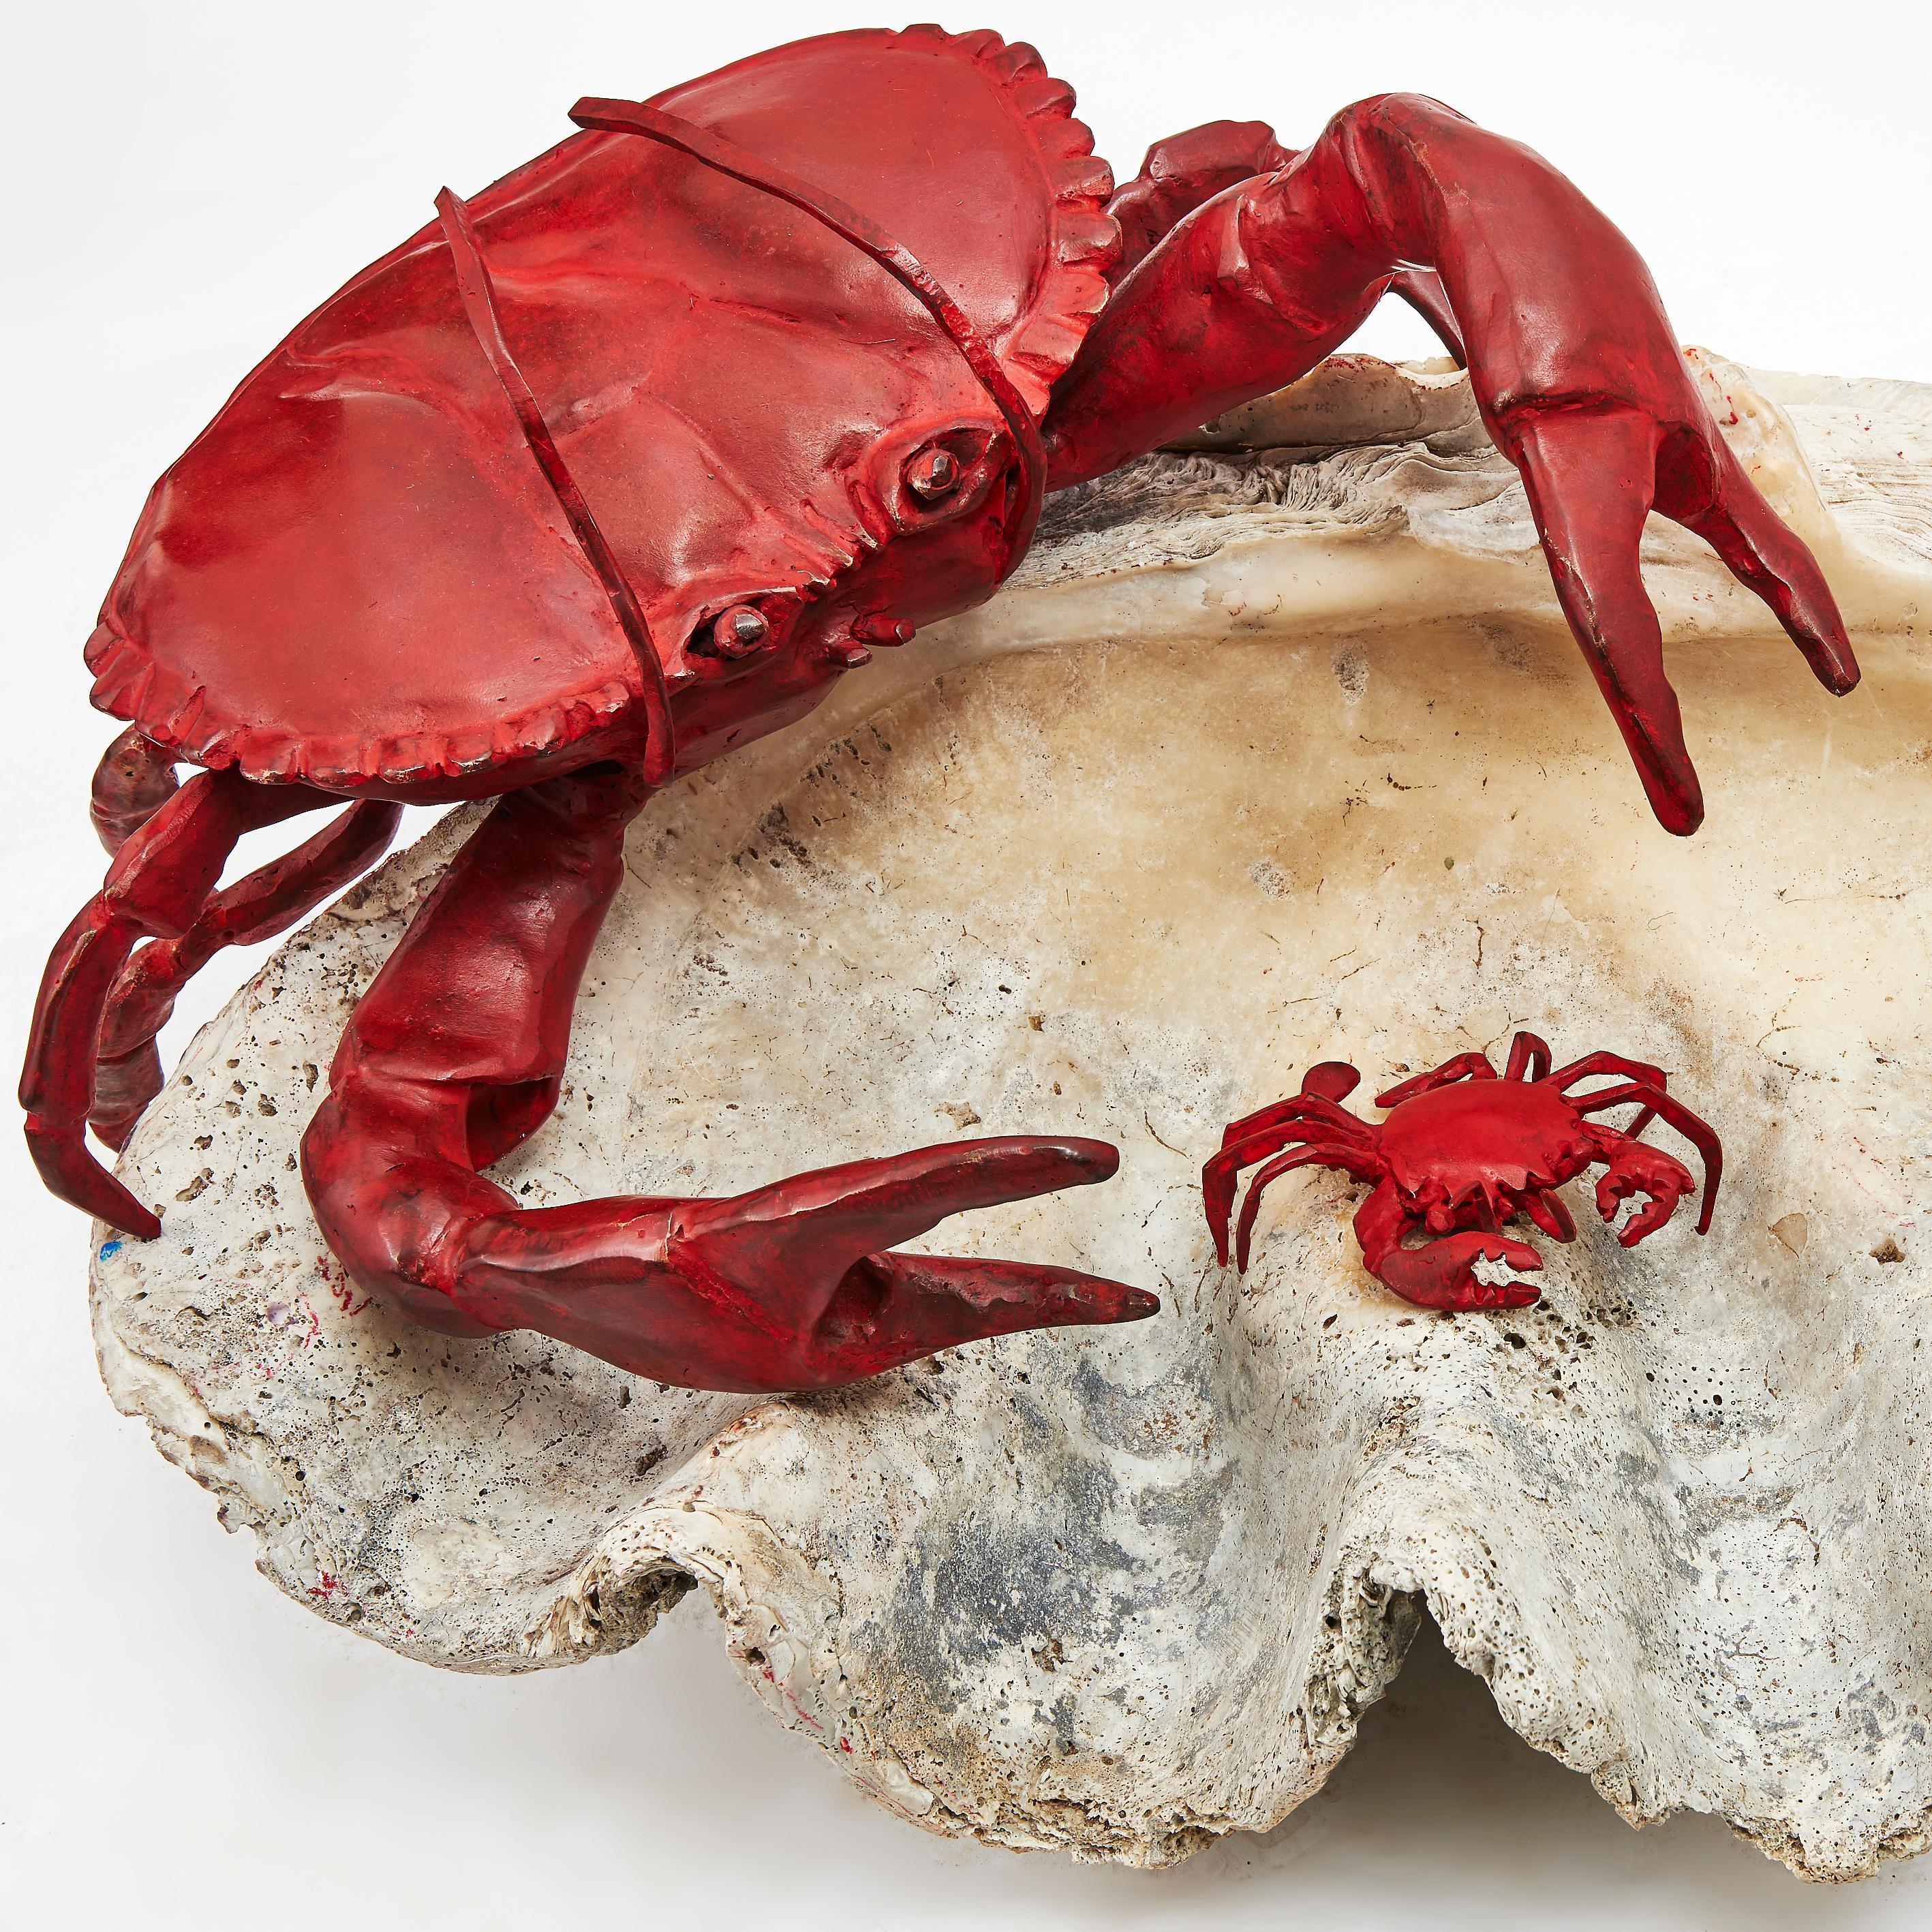 Antique Clam Shell Centre Piece with Paula Swinnen Crab Sculptures, 2019. 